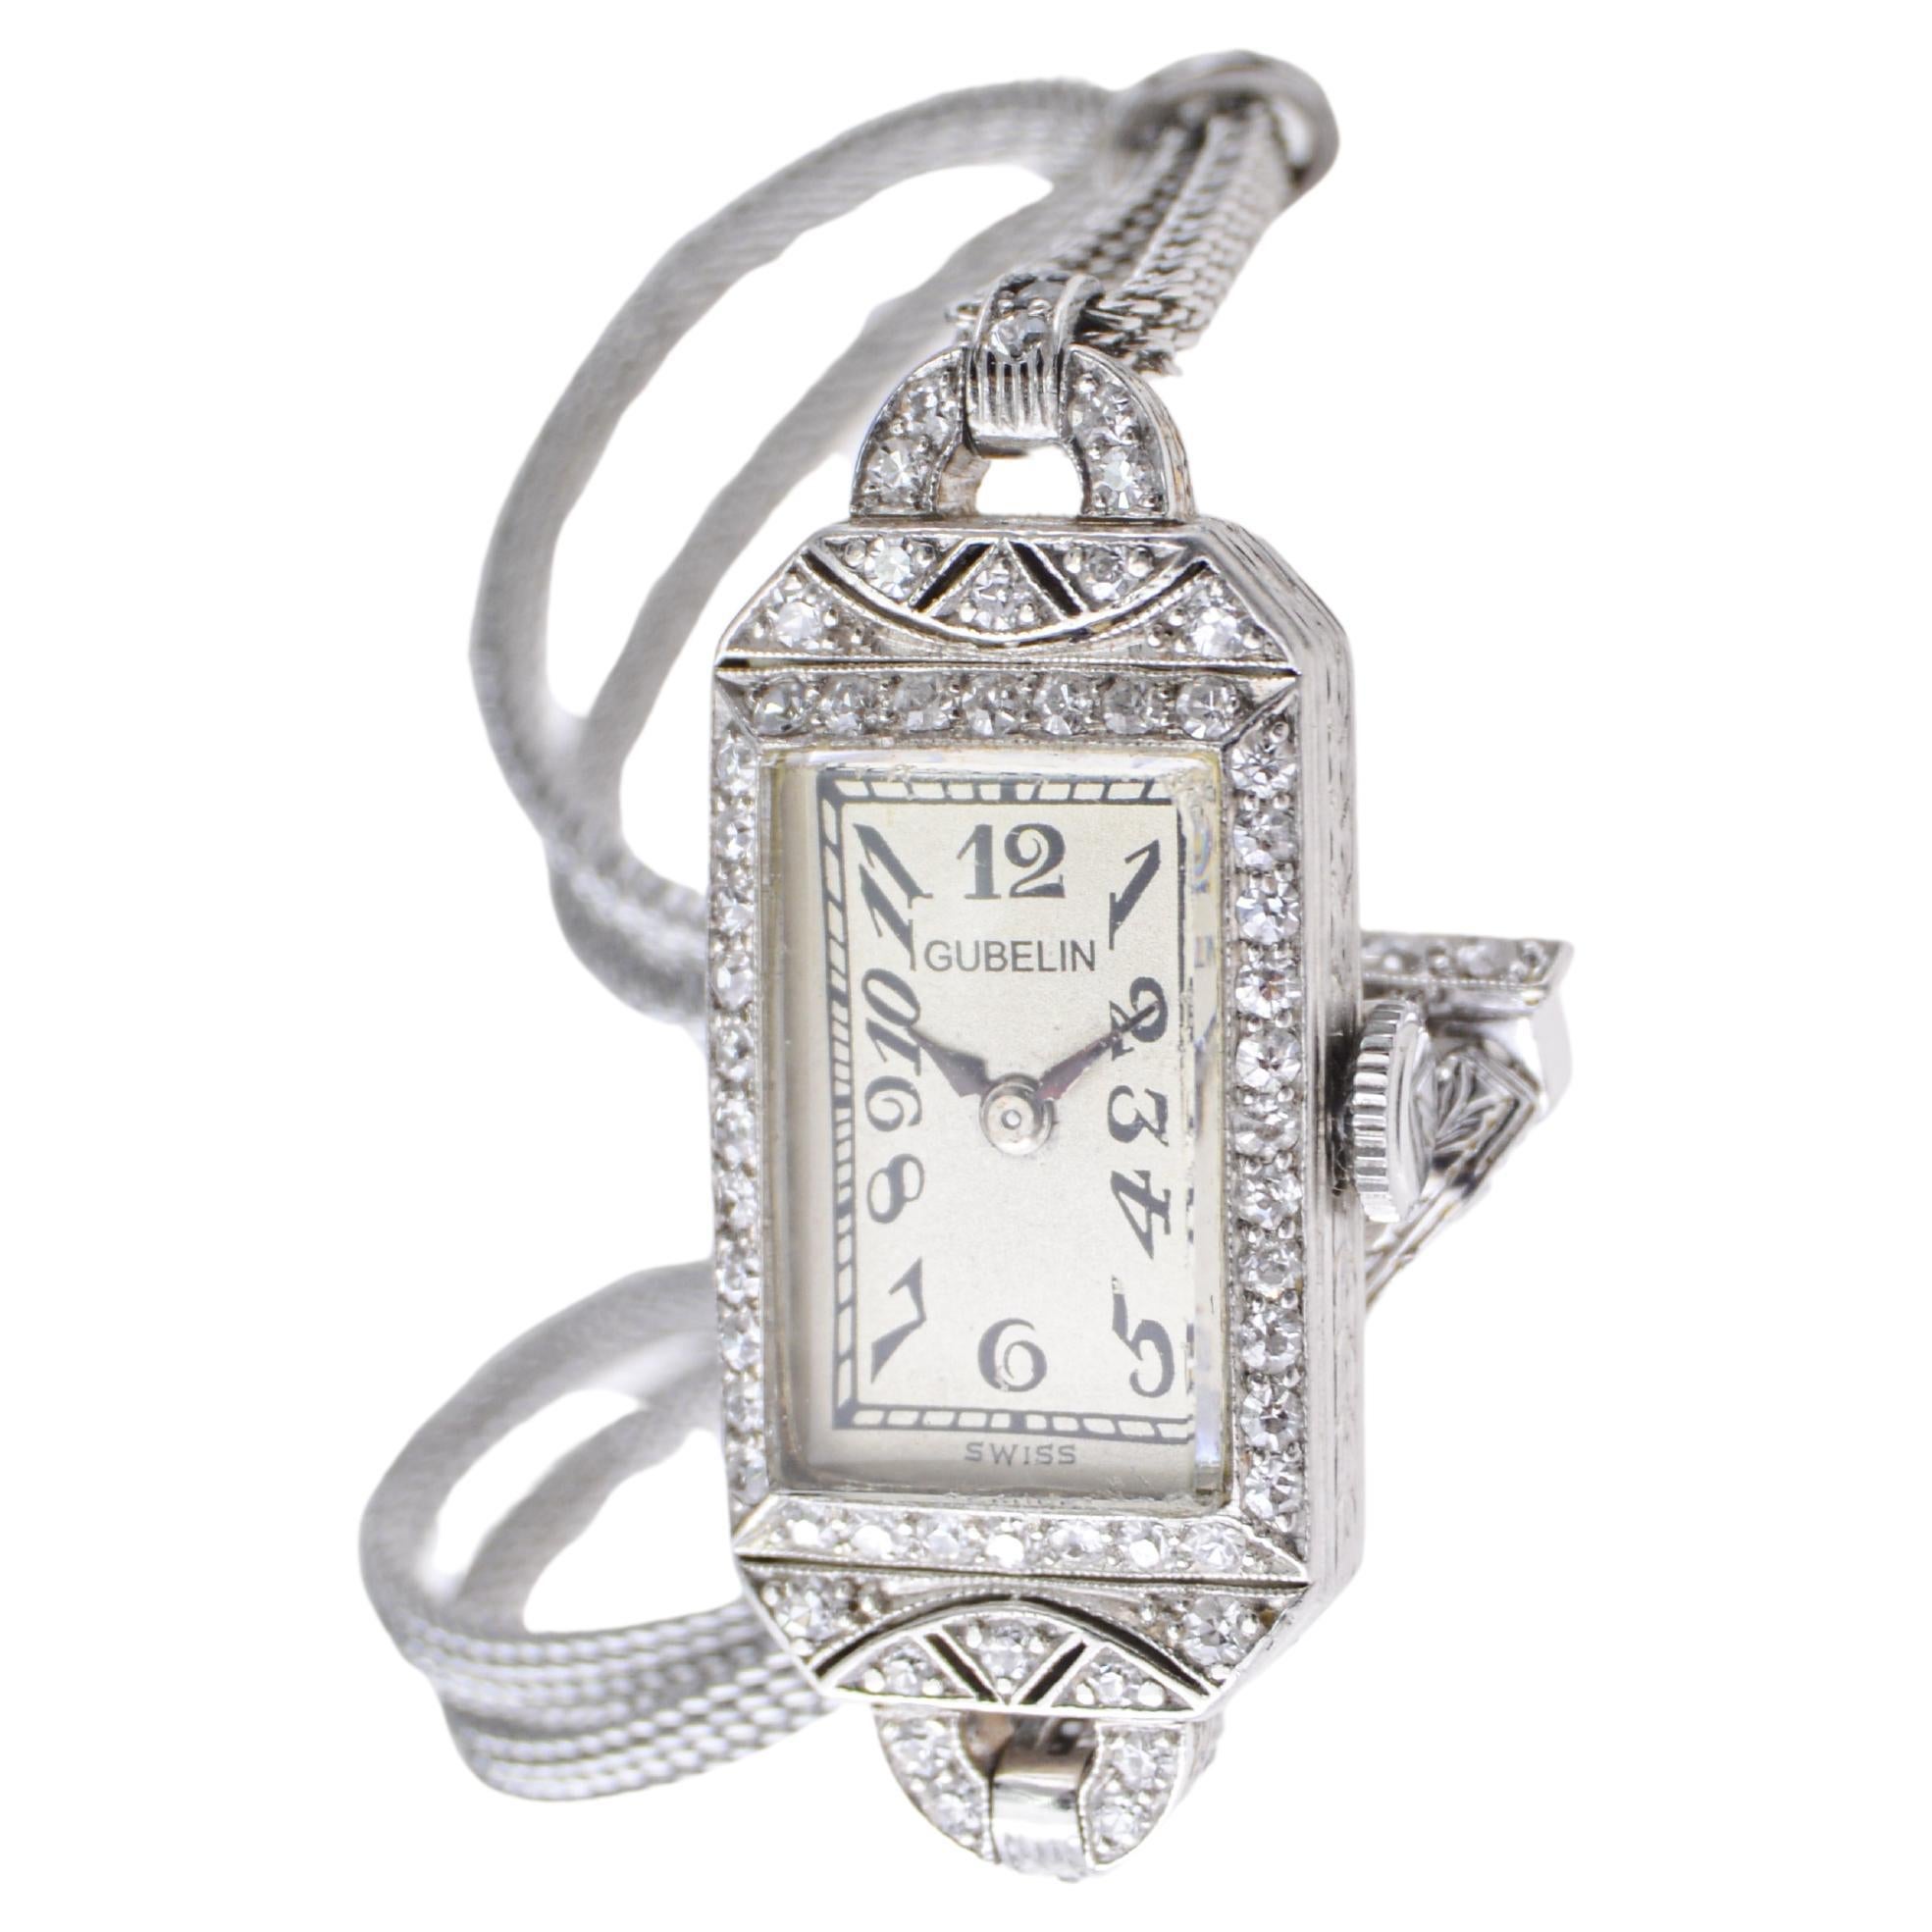 Gubelin Platinum and Diamond Art Deco Manual Winding Dress Watch, circa 1930s For Sale 2